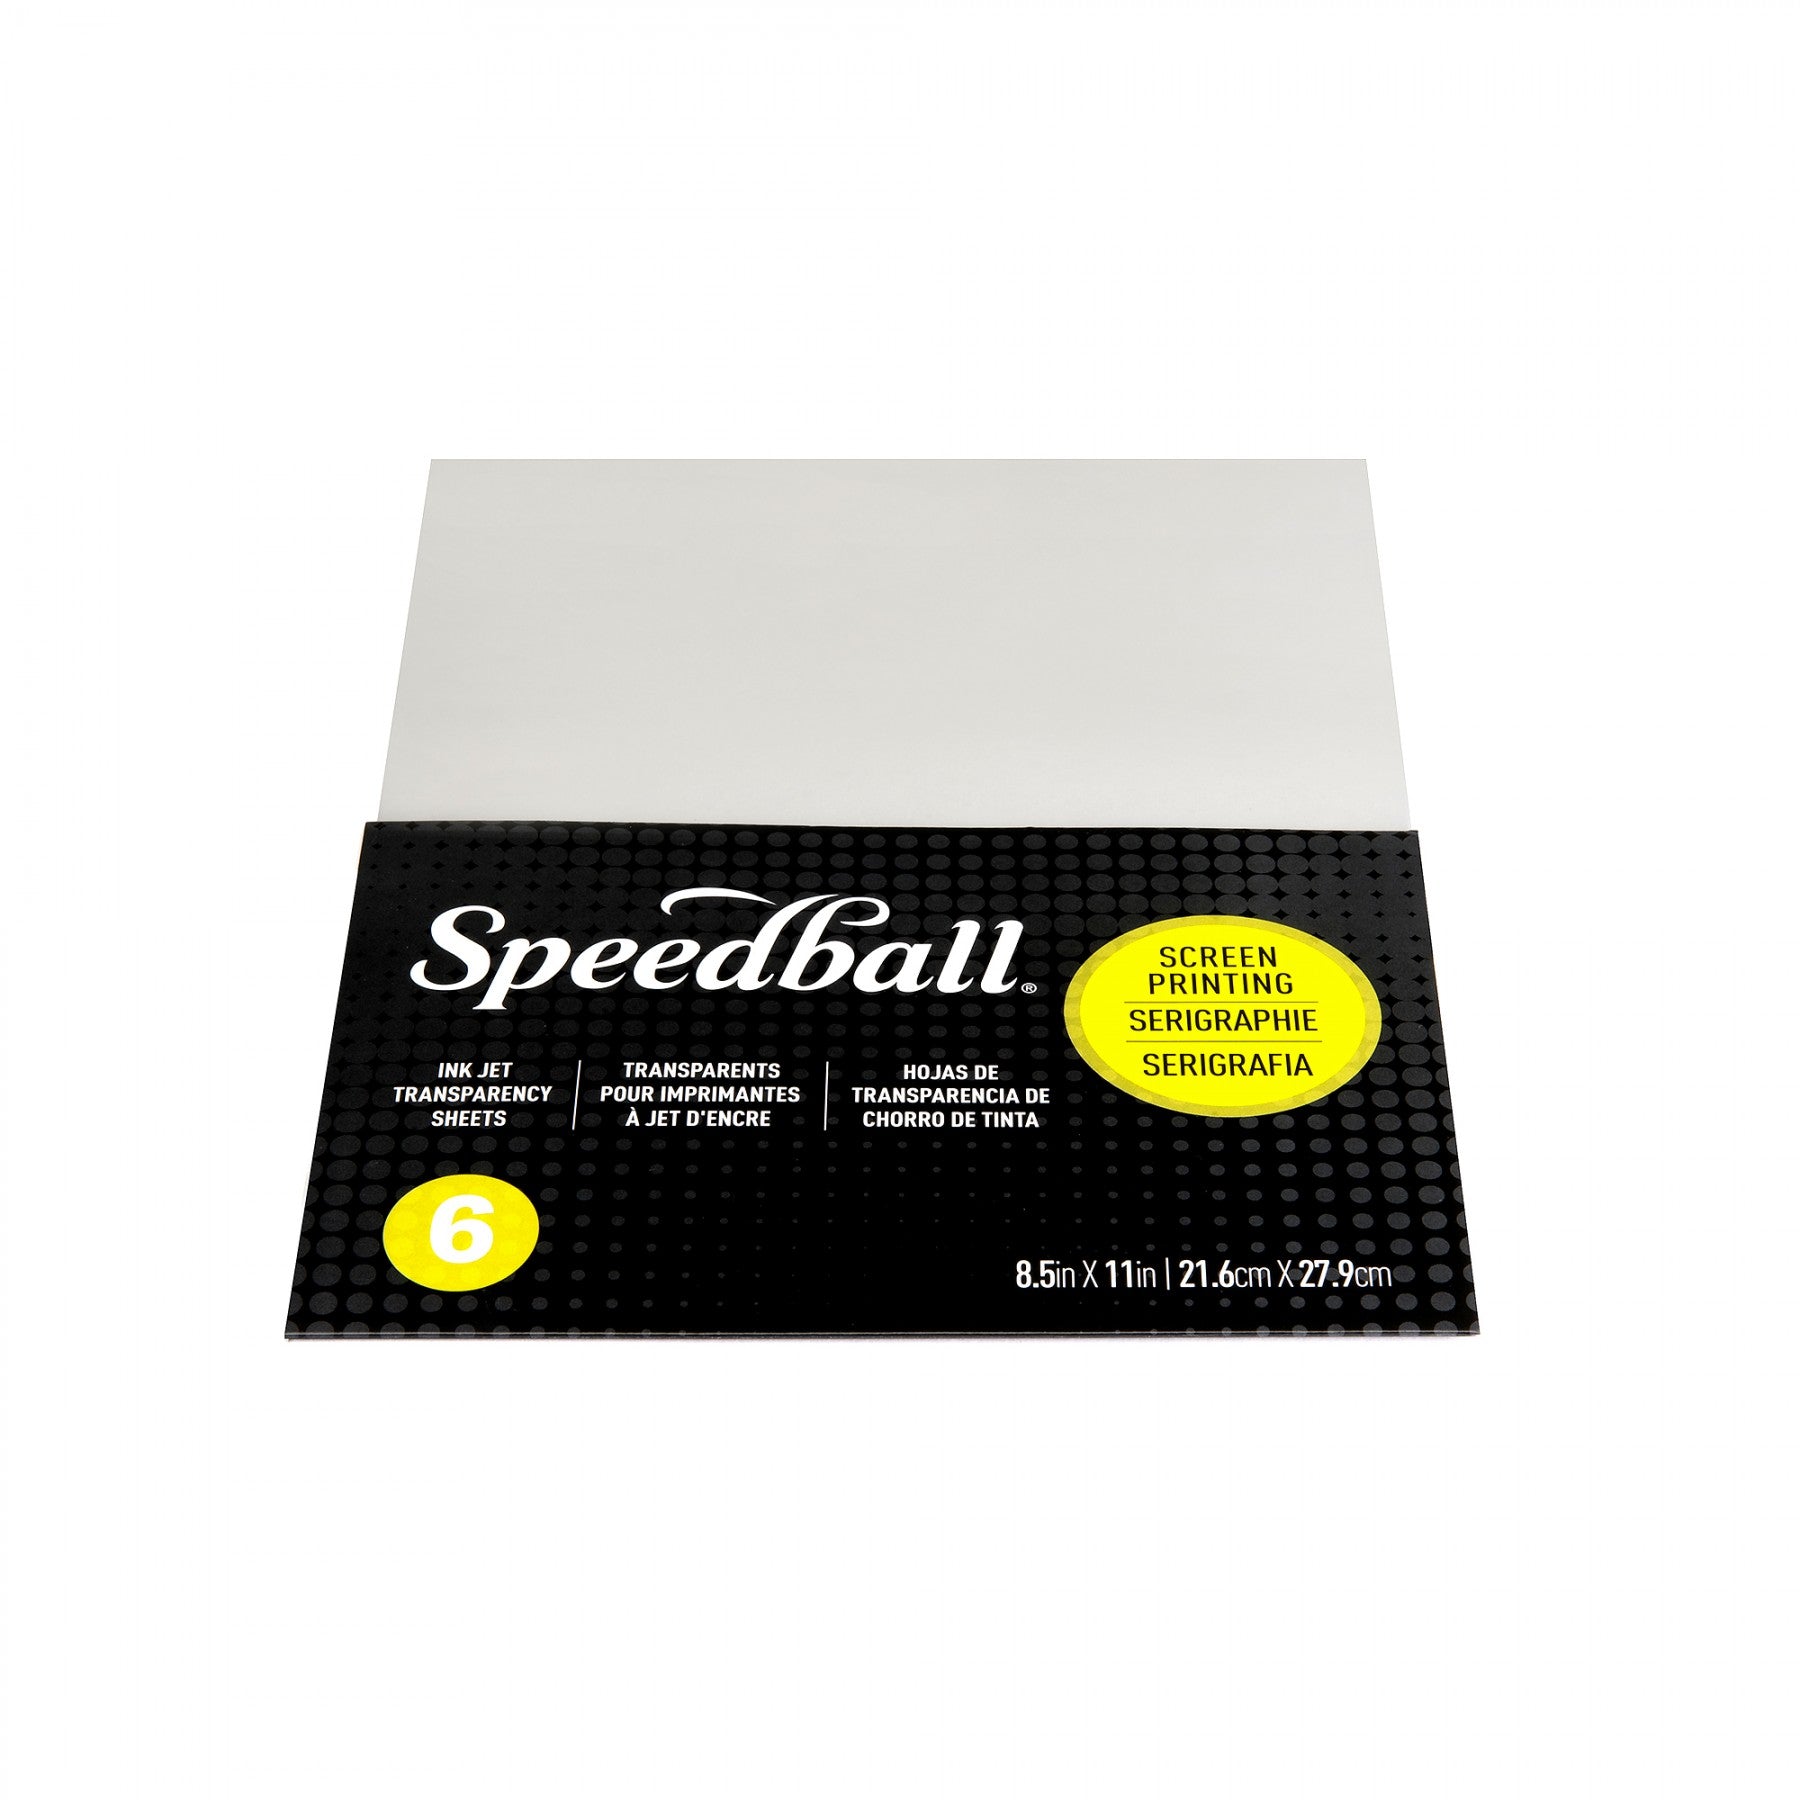 Speedball - Inkjet Transparency Pack (4548319838295)